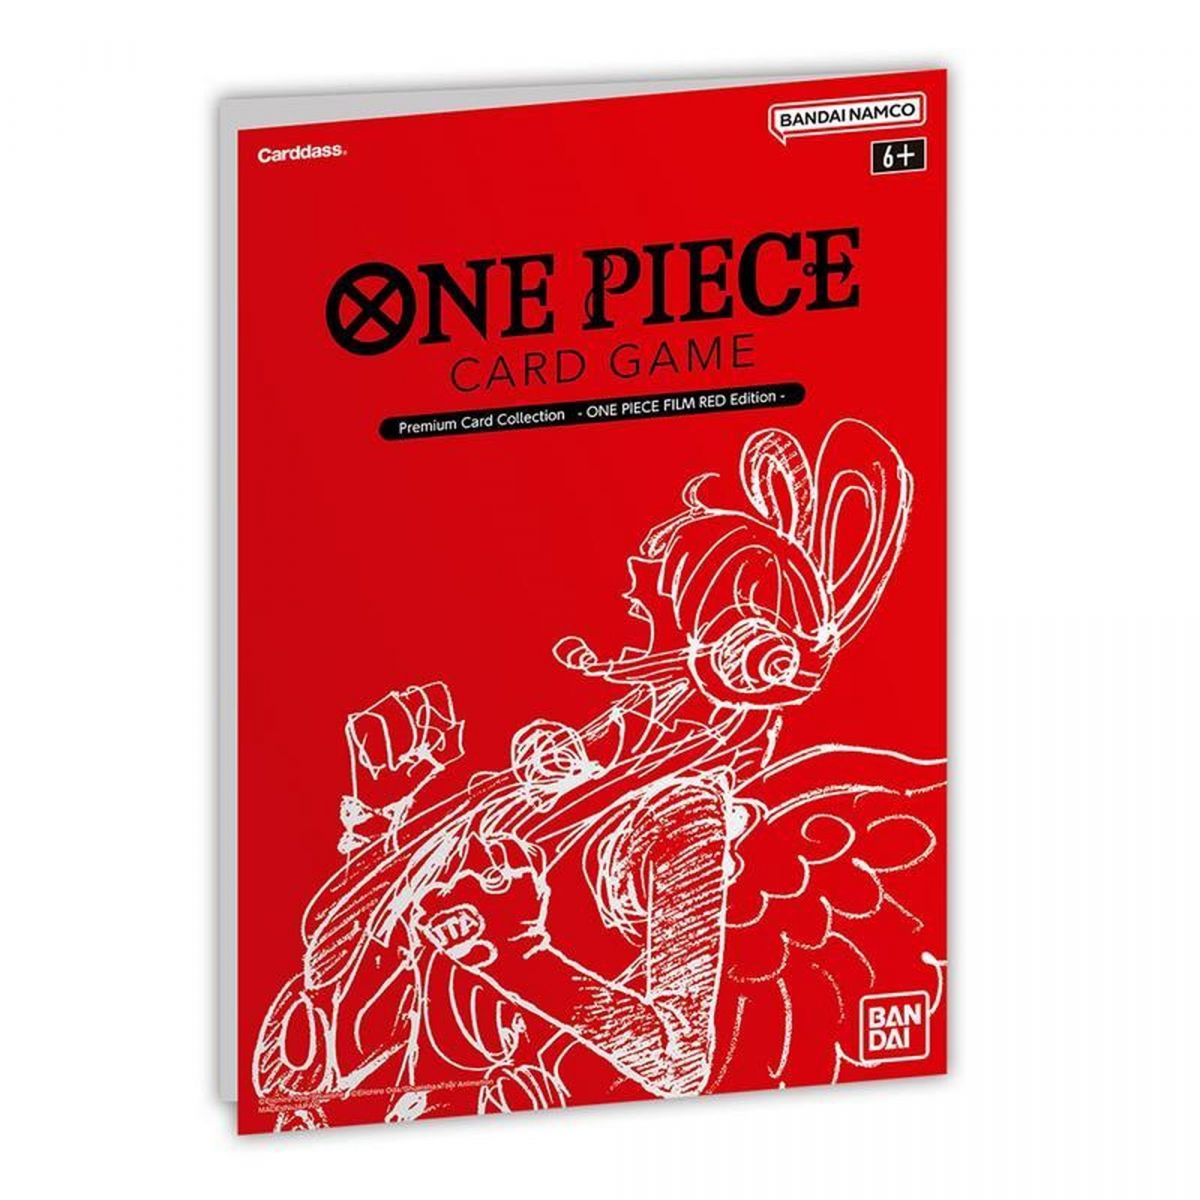 One Piece CG - Coffret - Premium Card Collection - Film Red Edition - EN